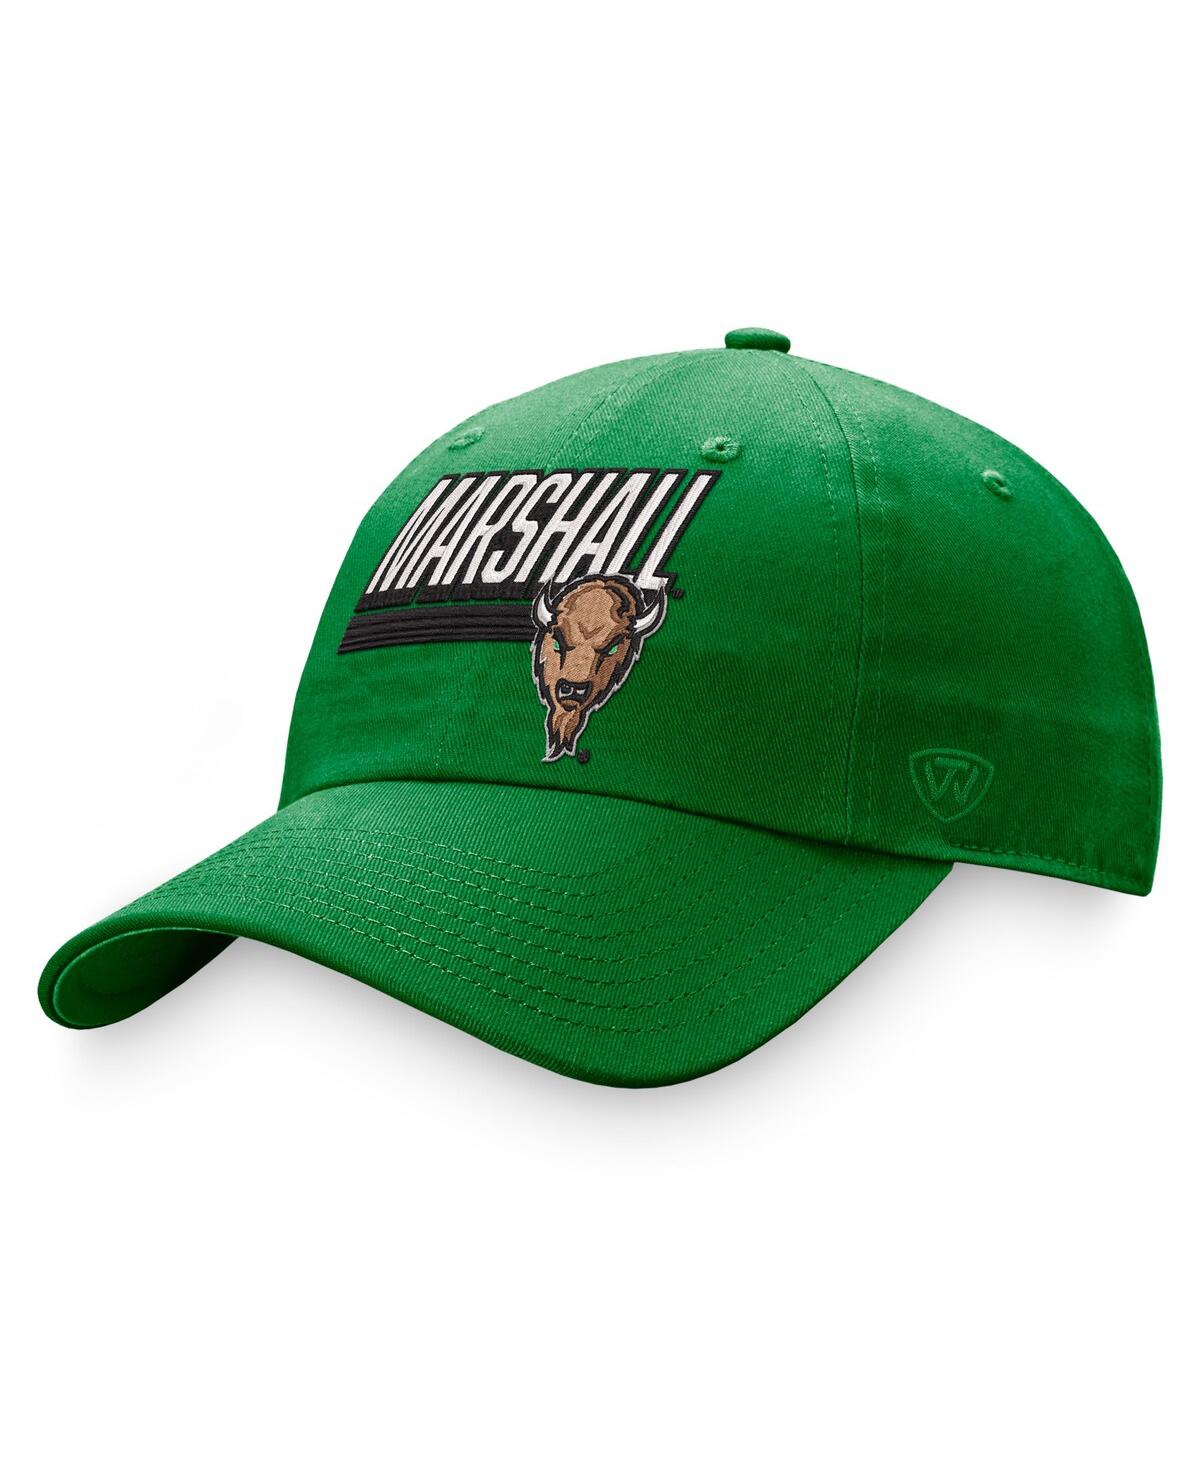 Men's Top of the World Green Marshall Thundering Herd Slice Adjustable Hat - Green